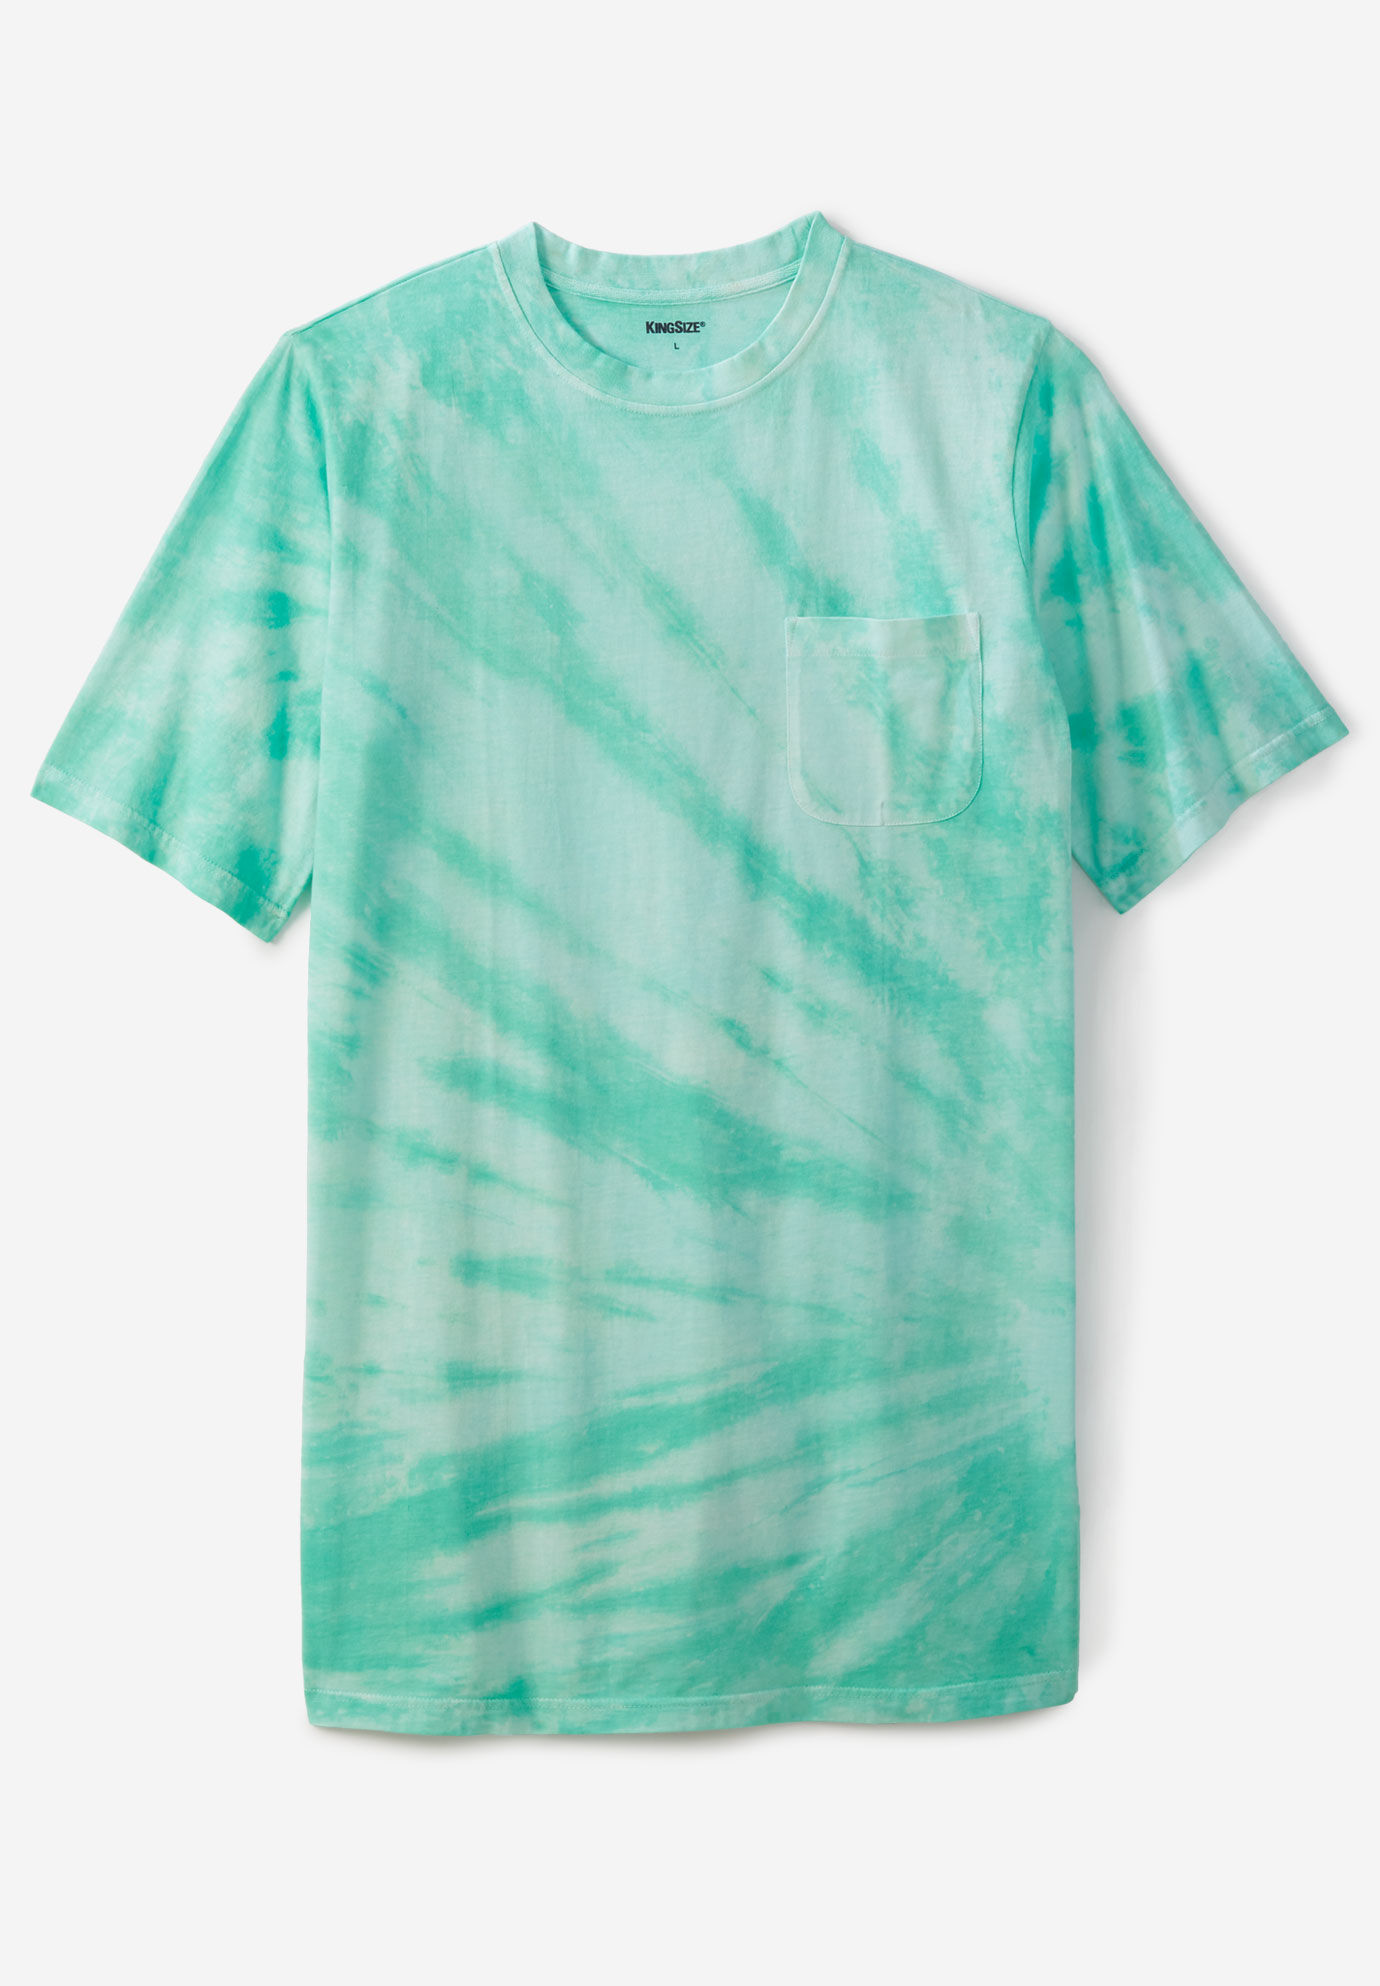 Kenneth Cole Dress Shirt Size Chart